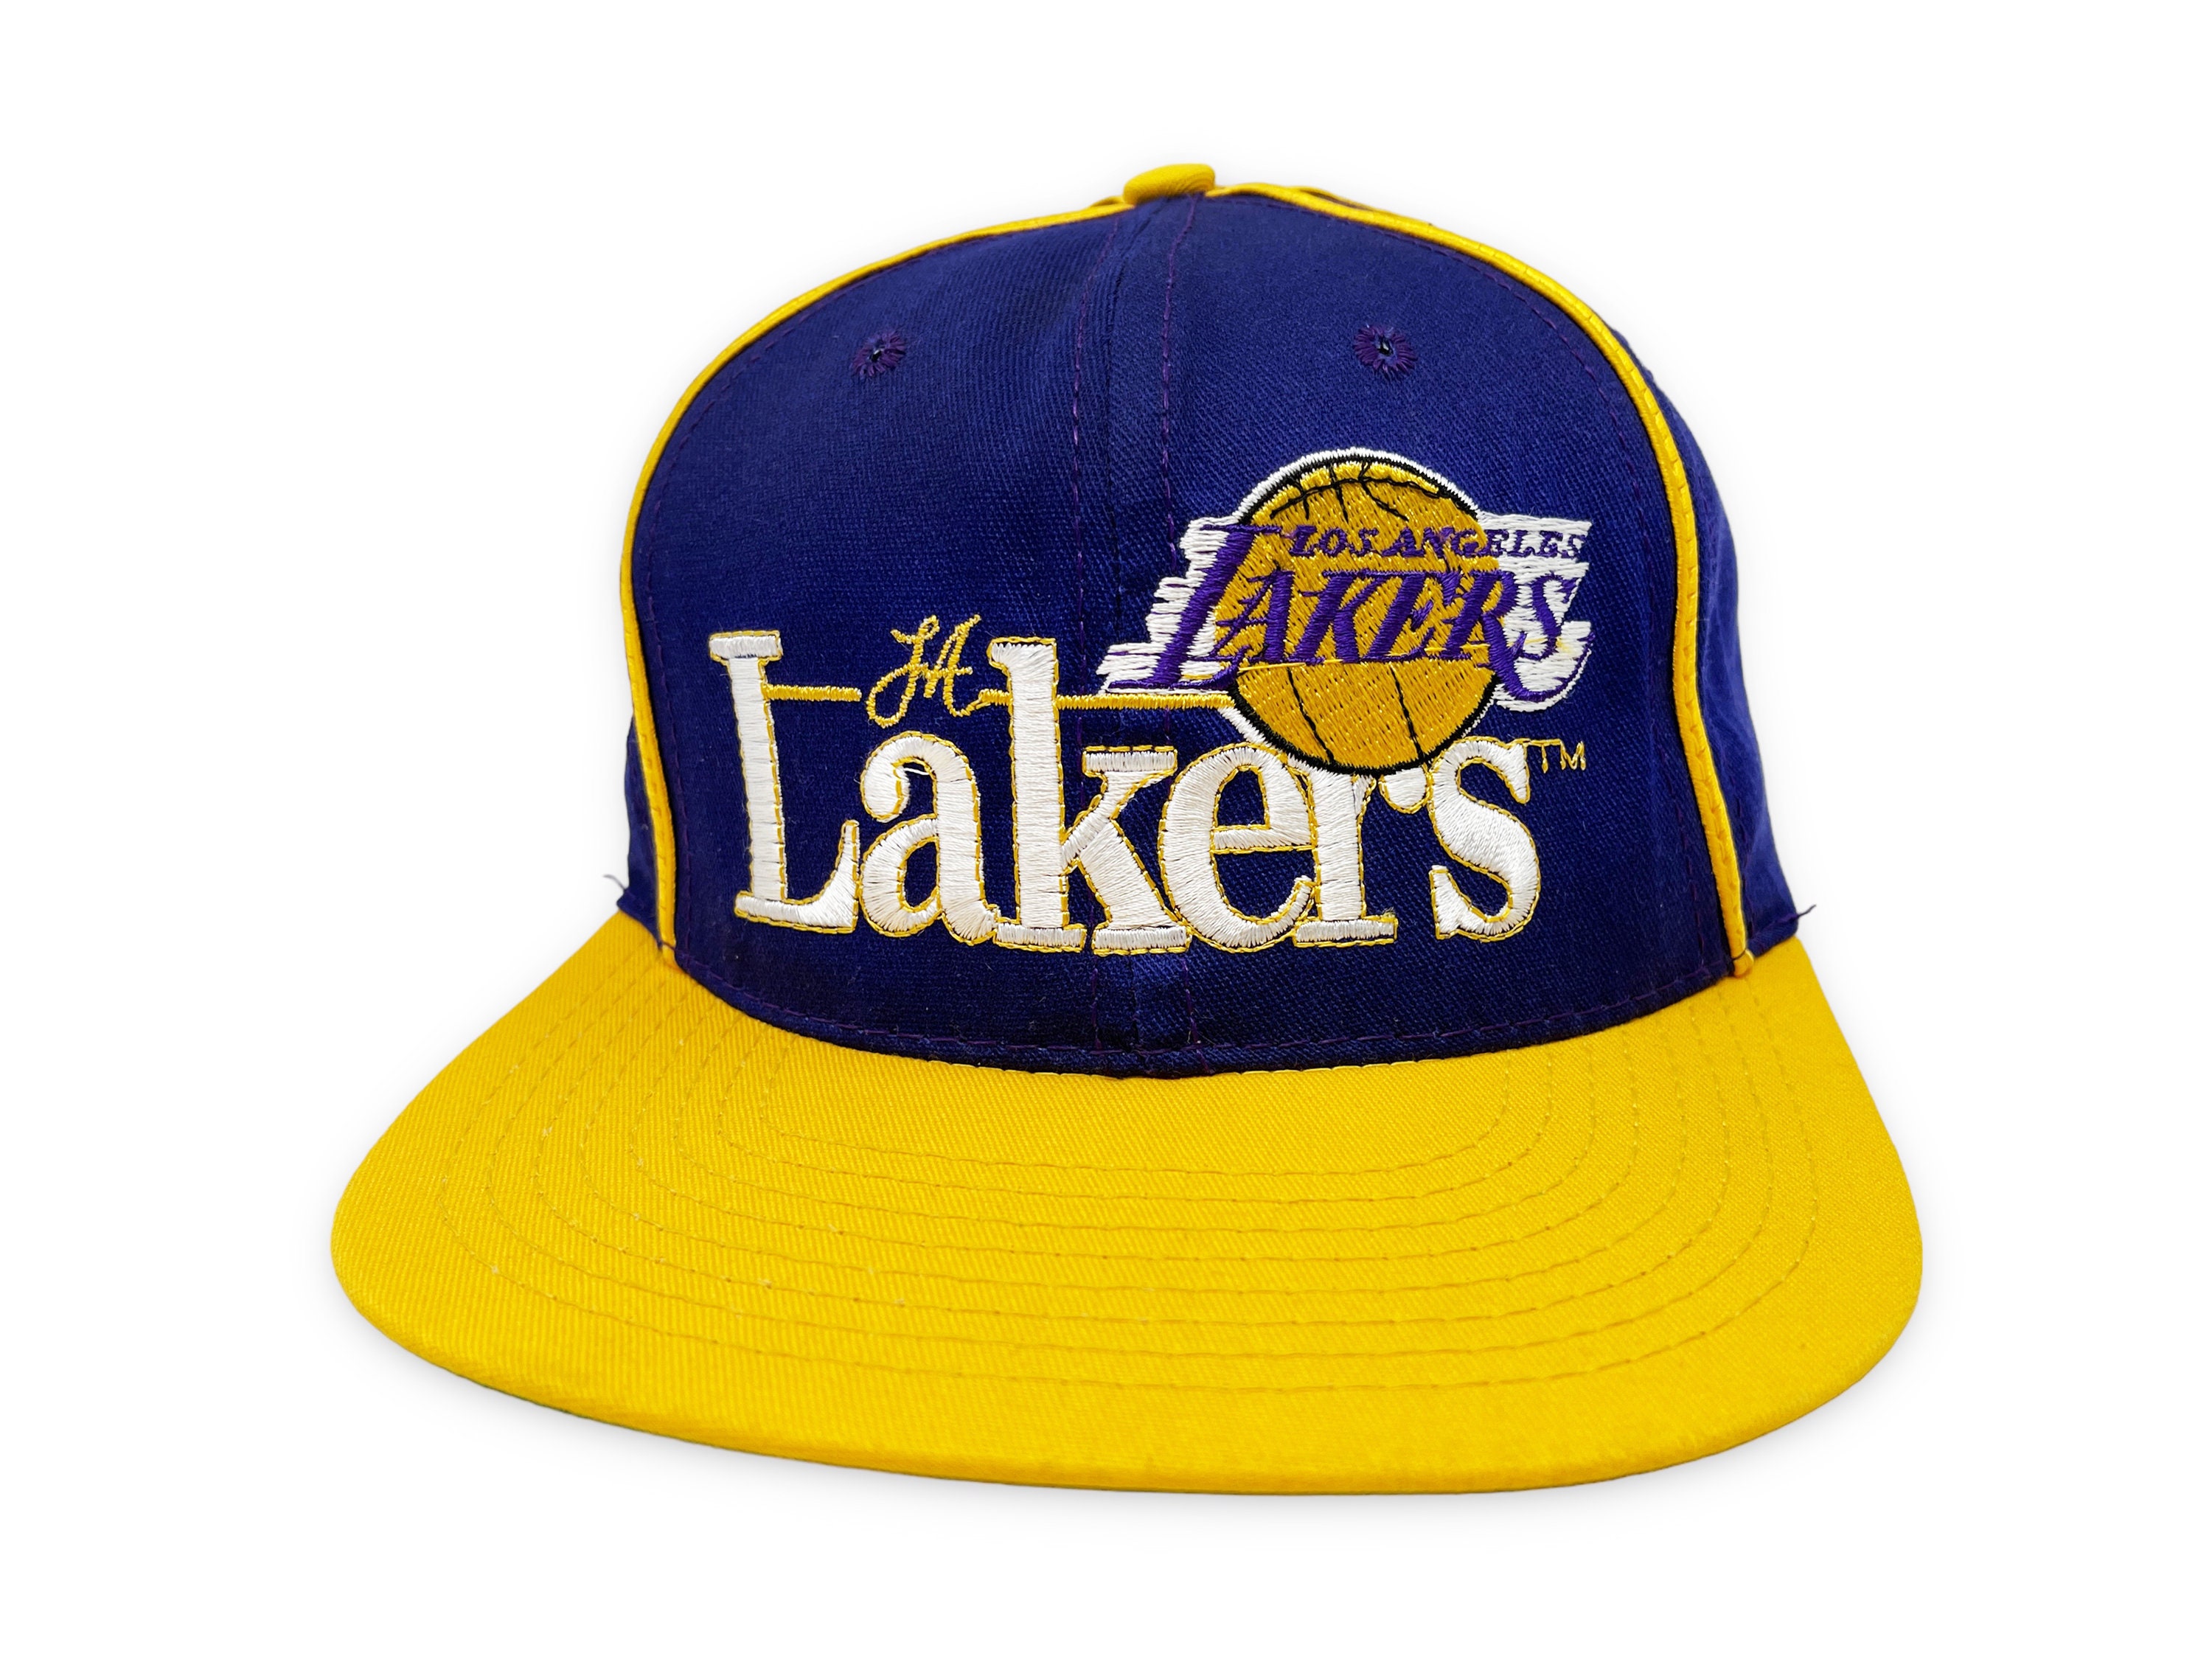 Los Angeles LAKERS Original Vintage 90s LA Snapback Hat Two Toned Official  Licensed NBA Basketball Team Adjustable U.i.i Cap Nwt Deadstock